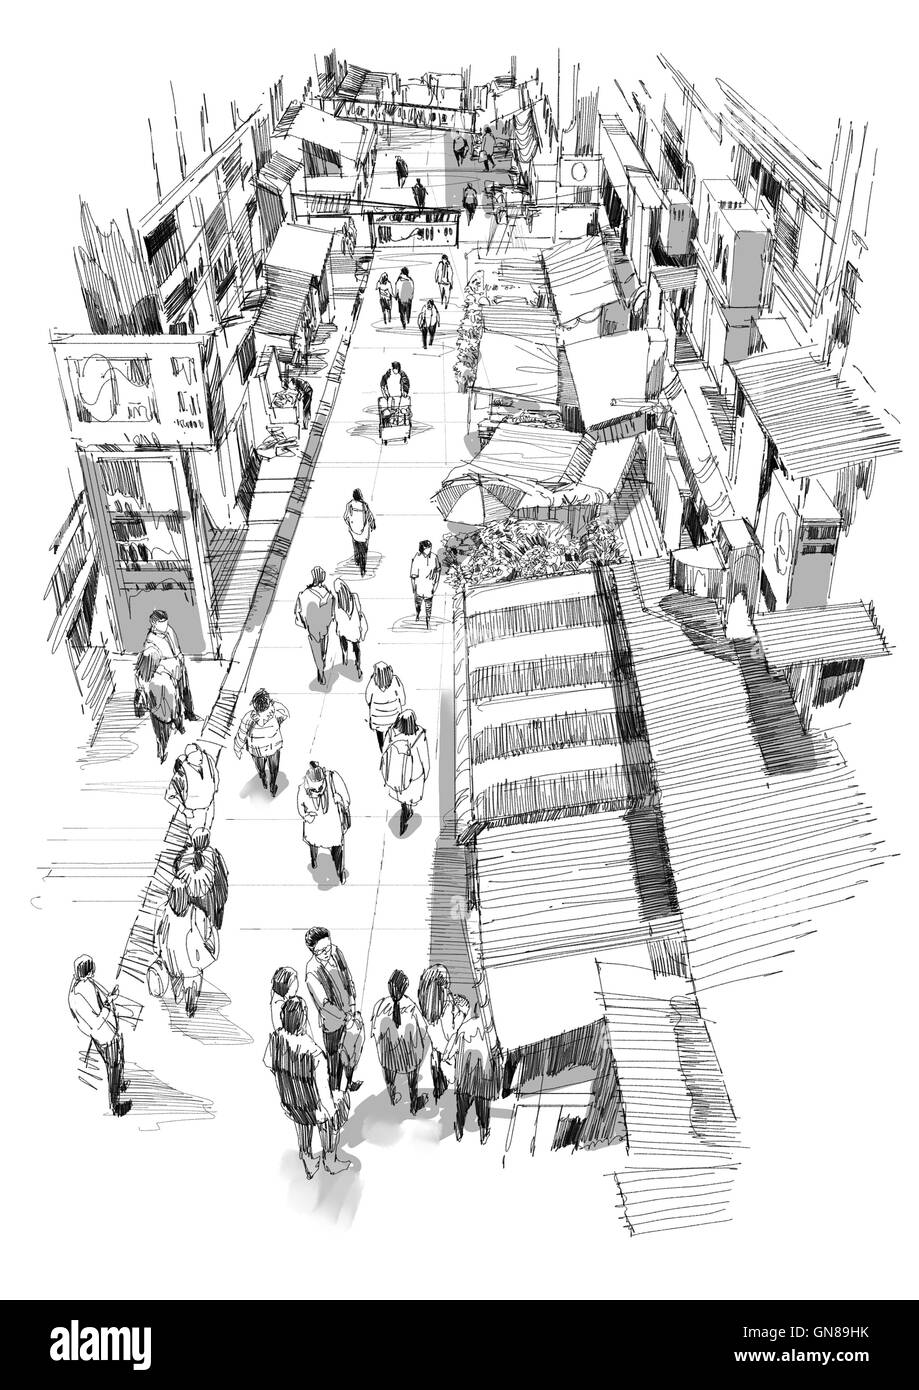 Croquis dessinés à la main, de gens qui marchent dans la rue market,Illustration,dessin Banque D'Images